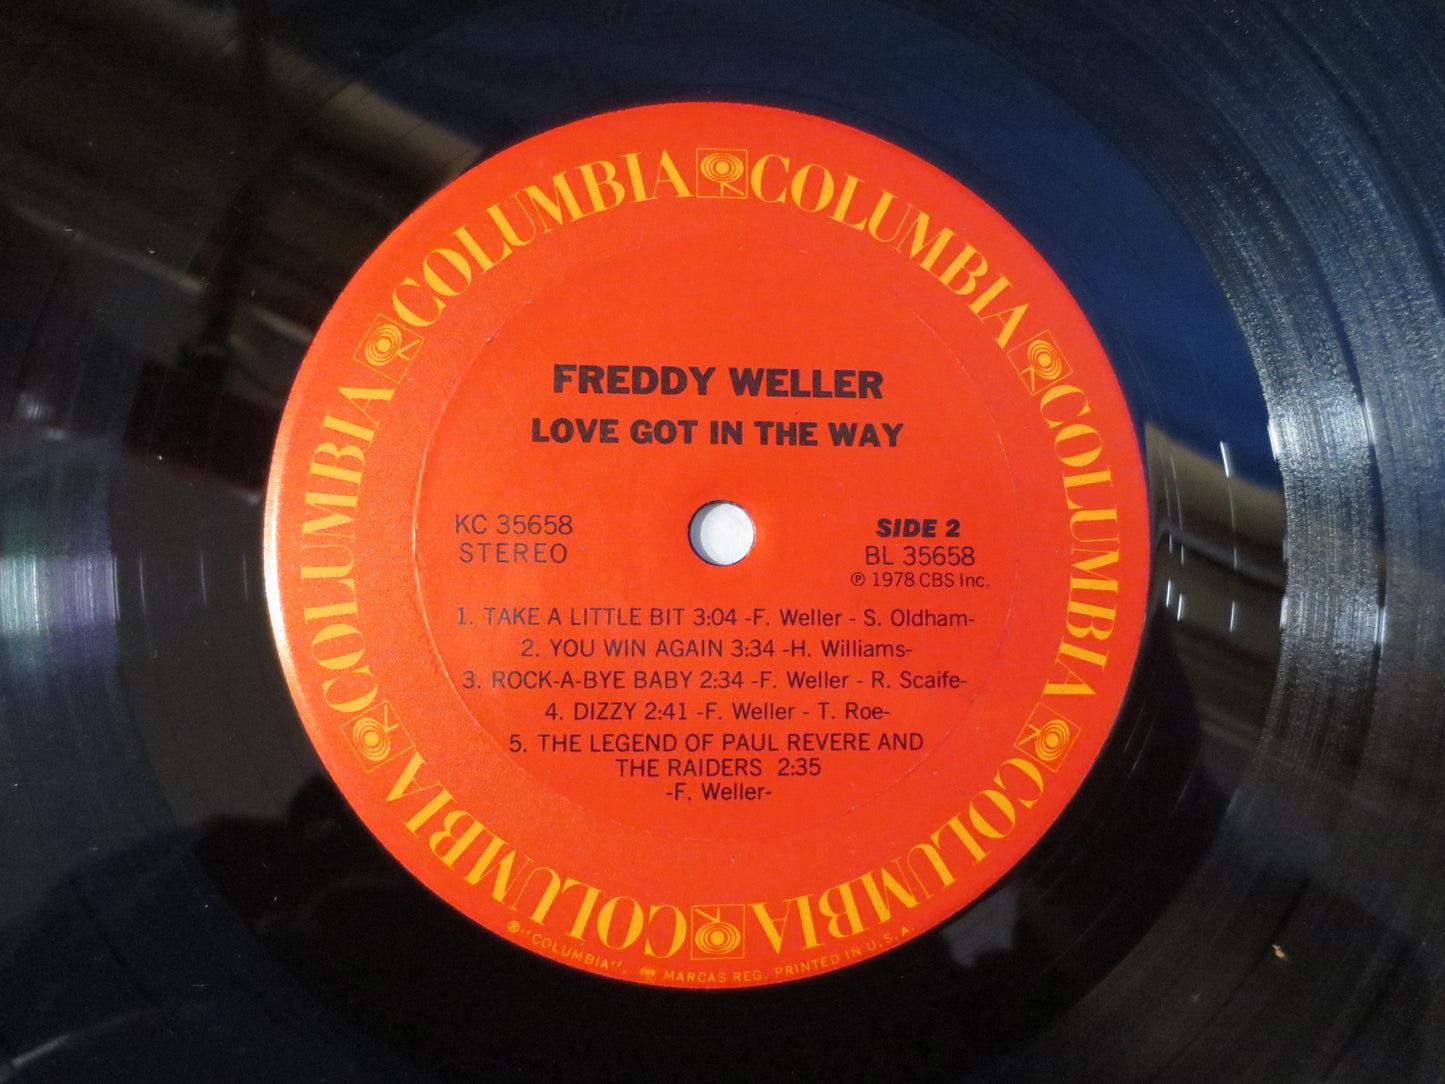 FREDDY WELLER, LOVE Got in the Way, Freddy Weller Record, Freddy Weller Albums, Lps, Freddy Weller Lp, Vinyl, 1978 Records